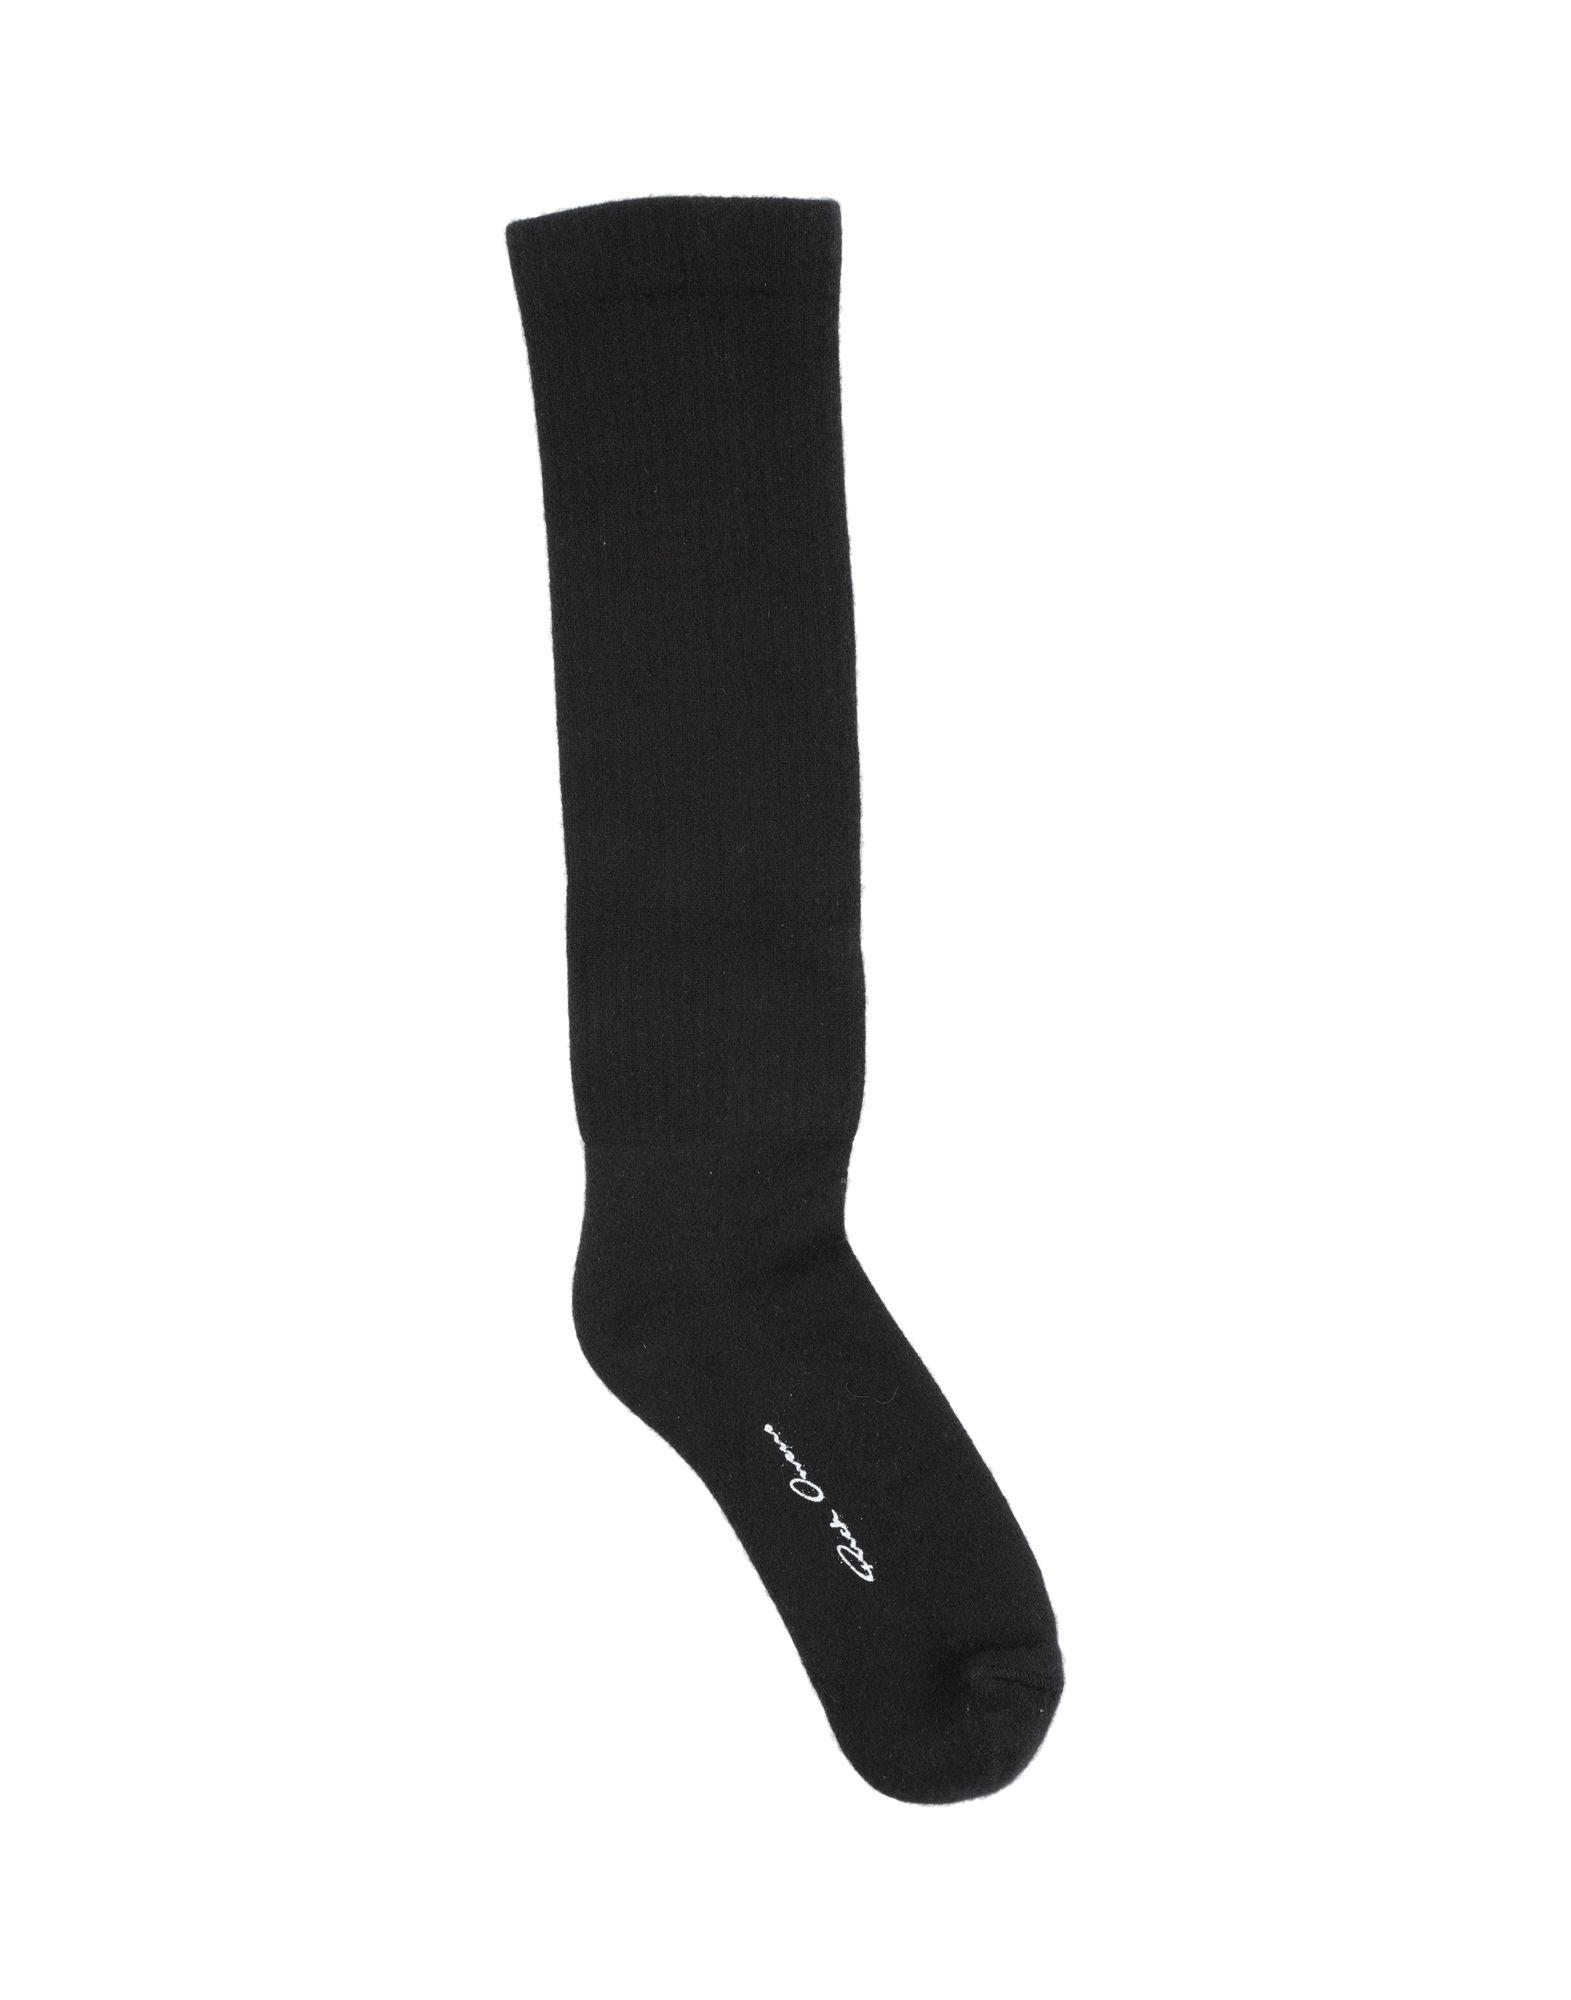 Lyst - Rick Owens Short Socks in Black for Men